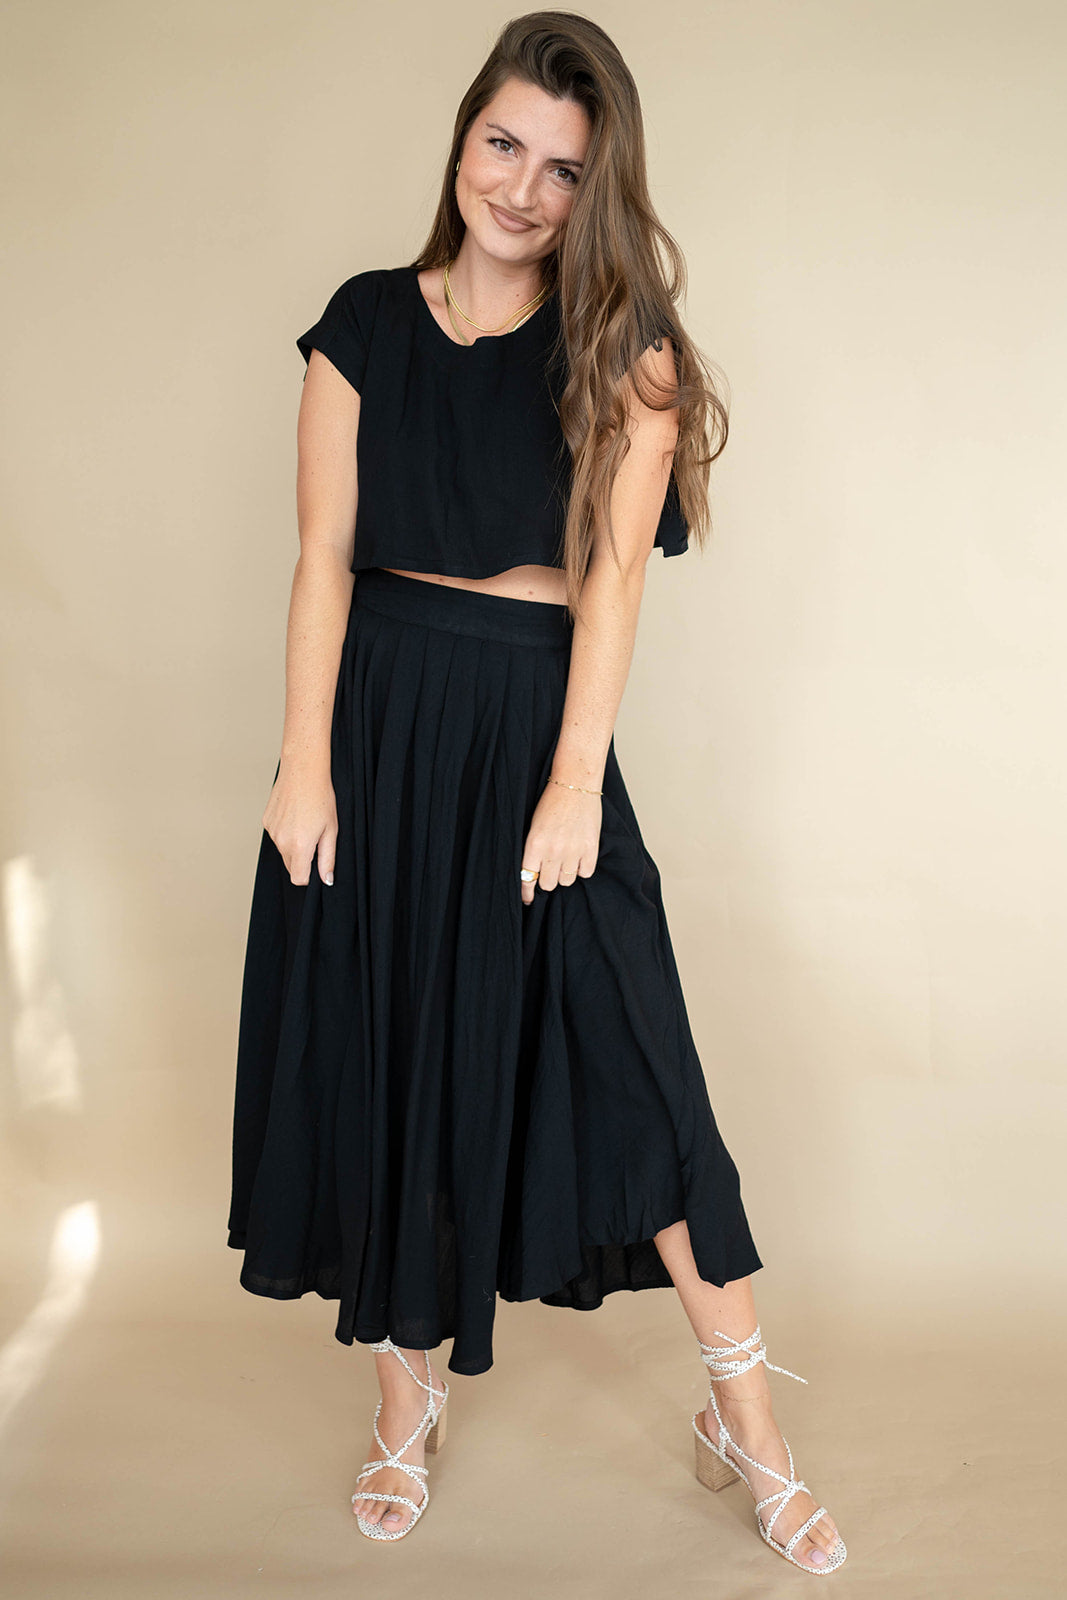 skirt and top matching set